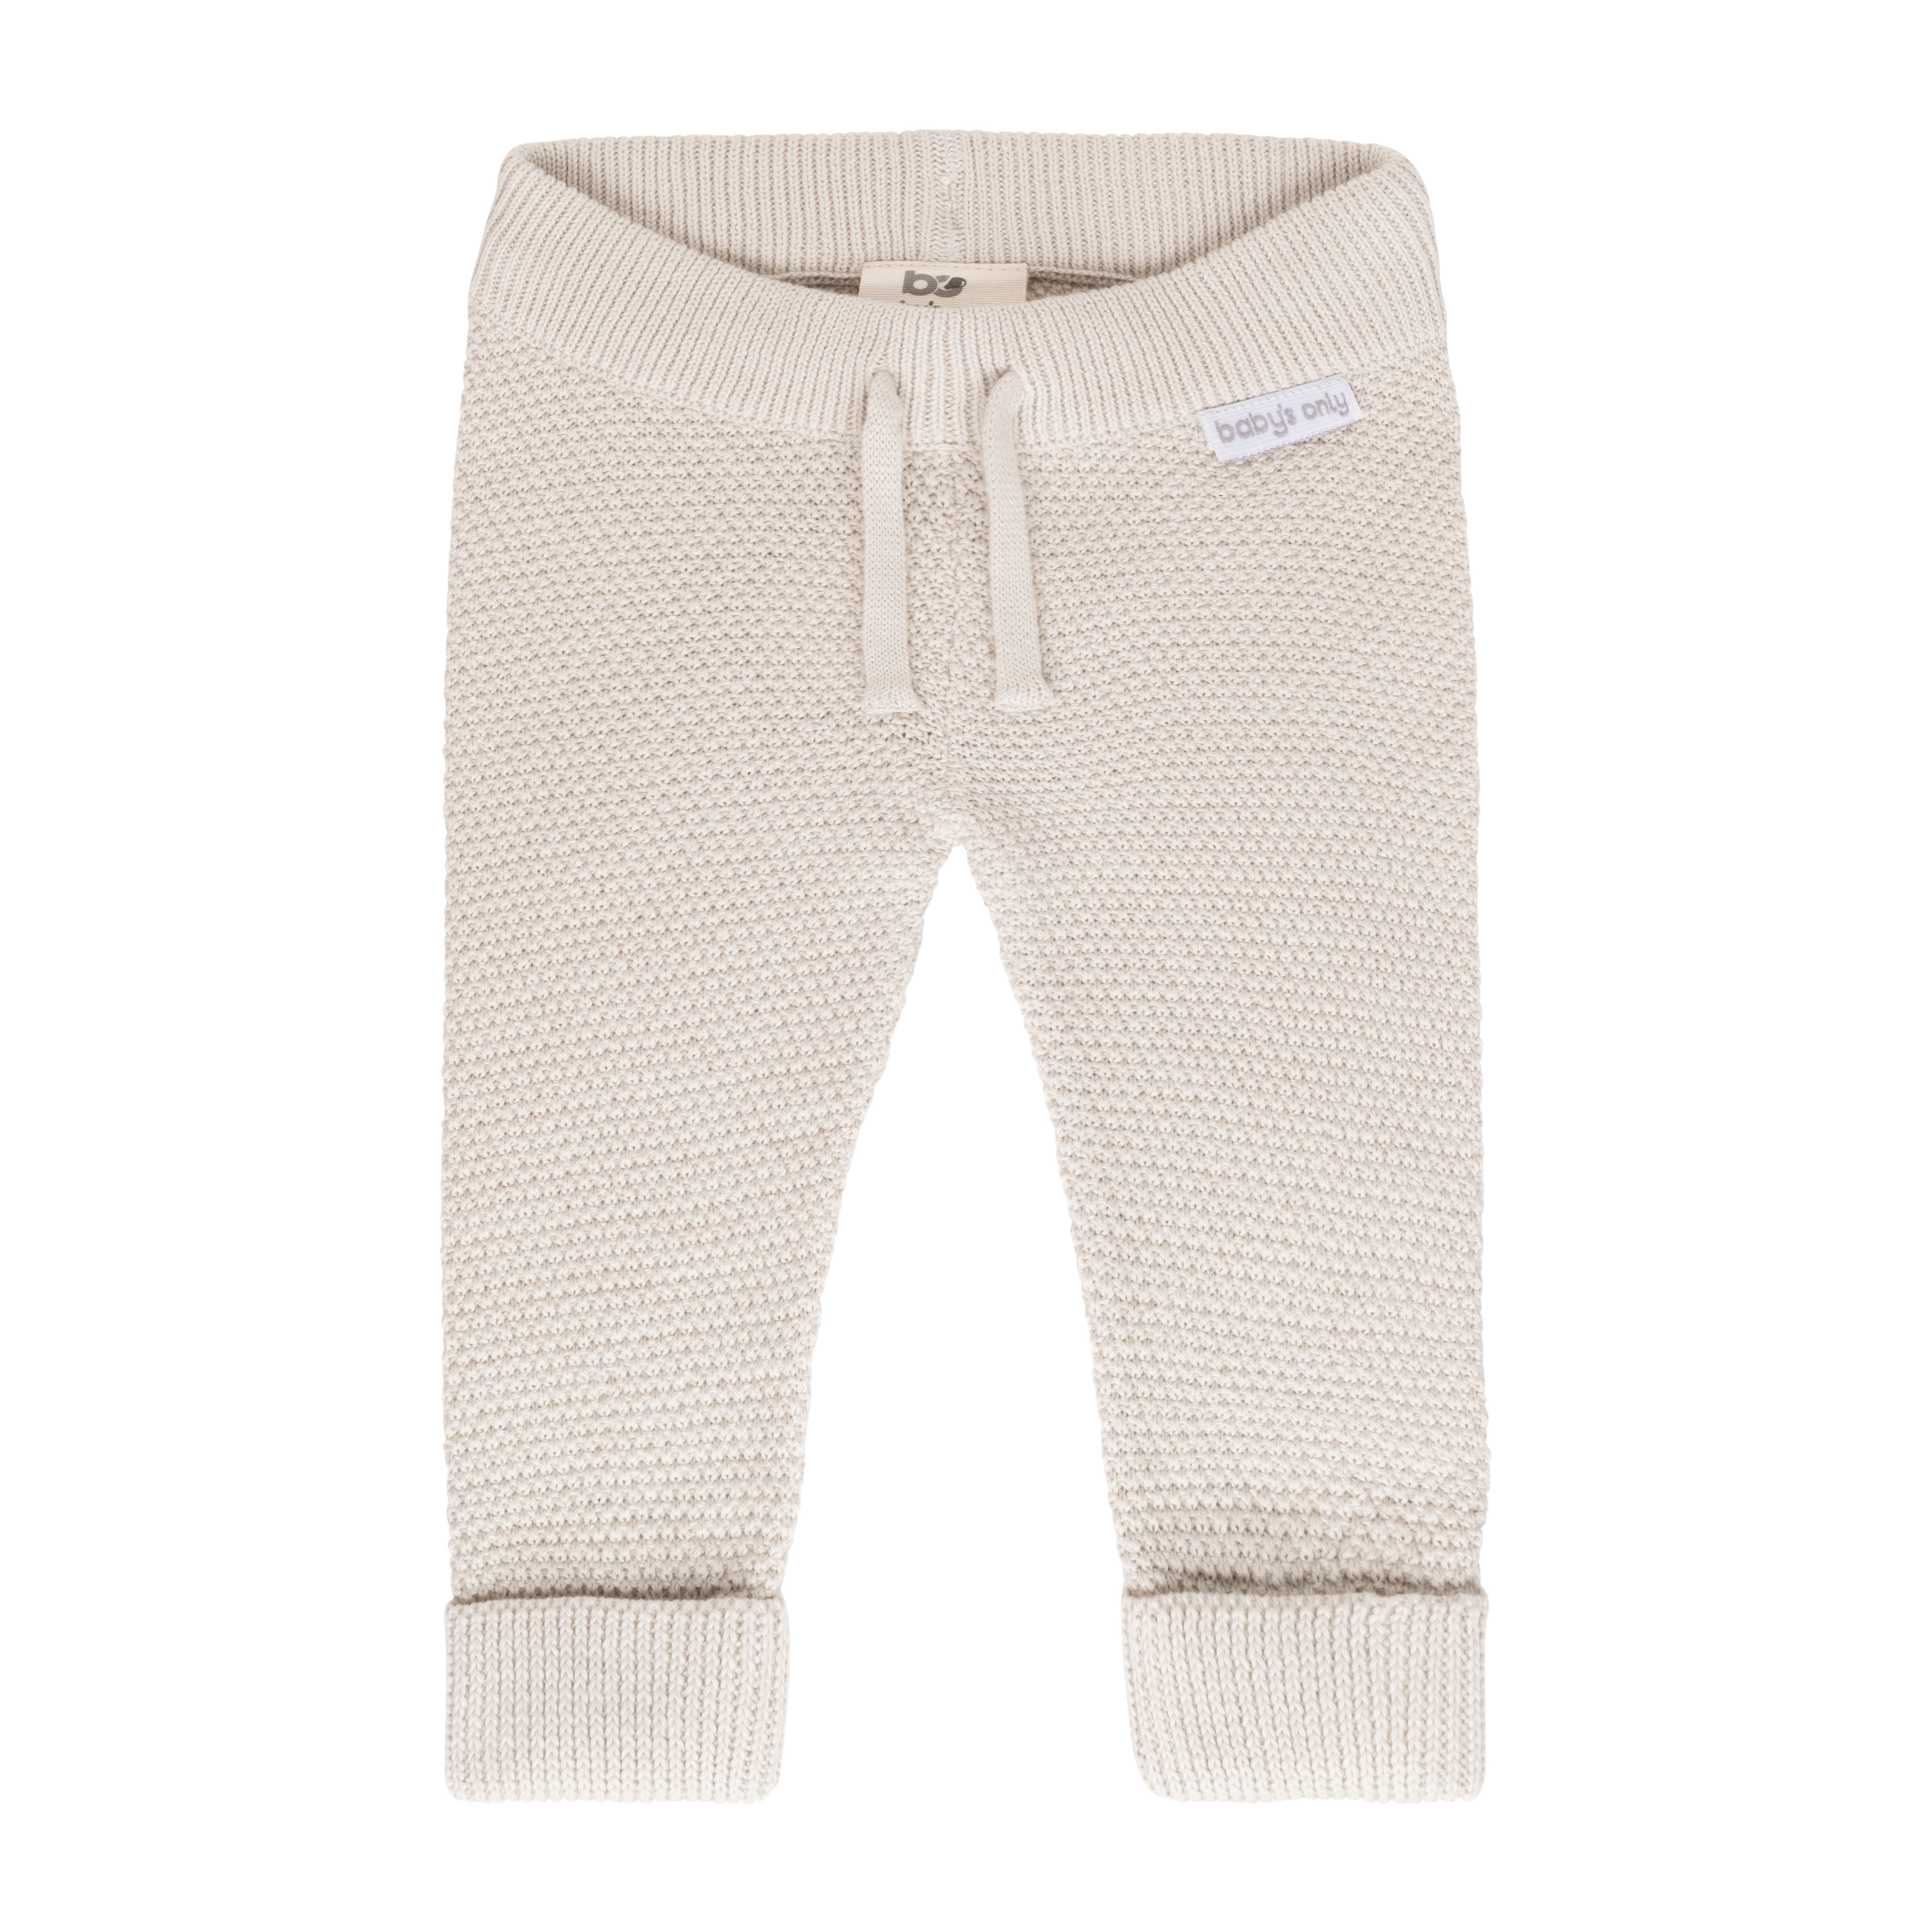 Pants Willow warm linen - 80